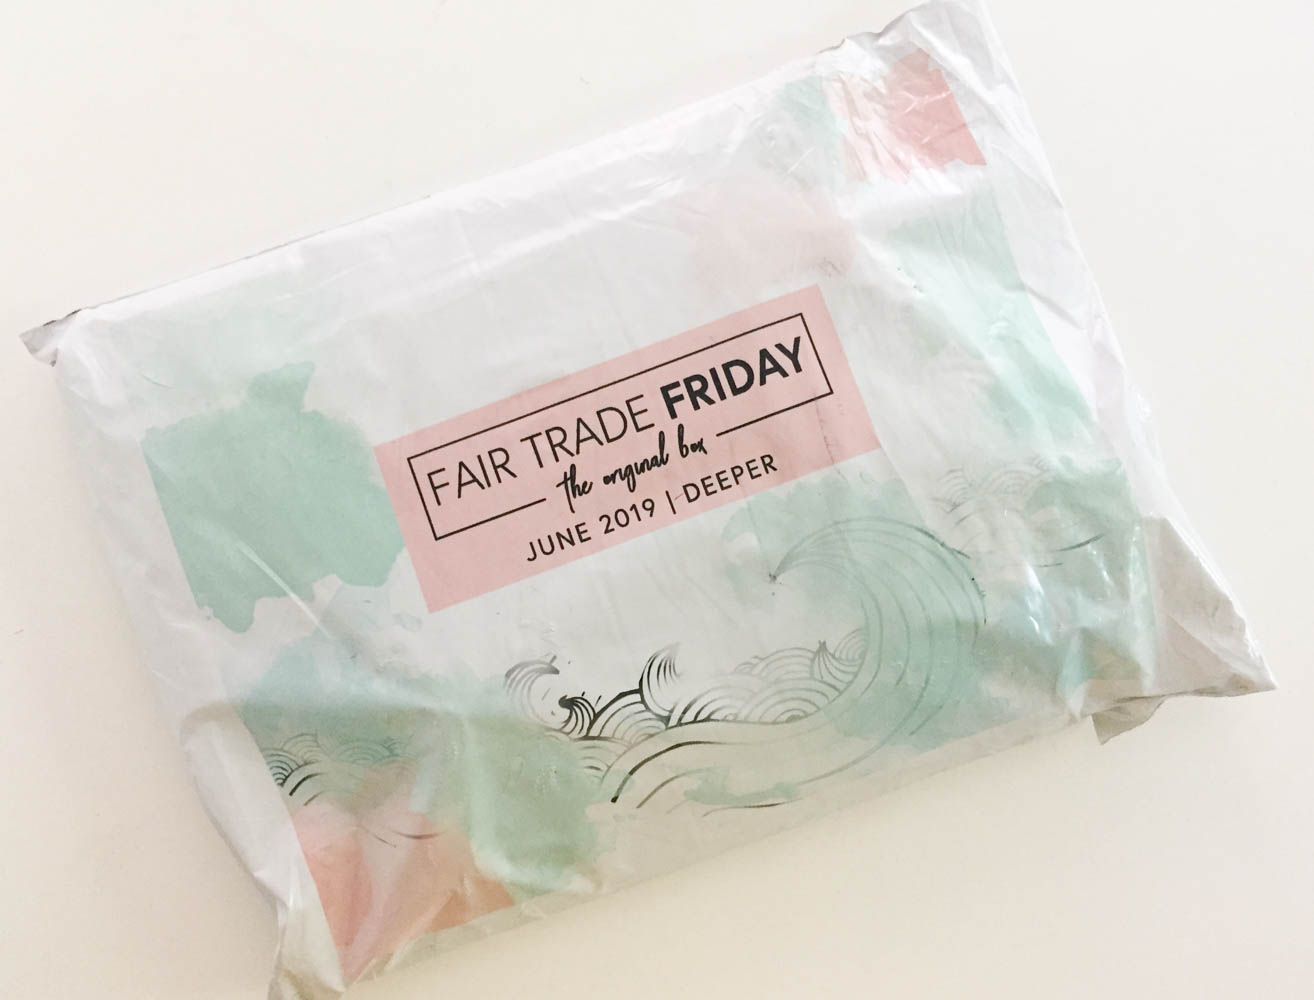 Fair Trade Friday Subscription Box Review – June 2019